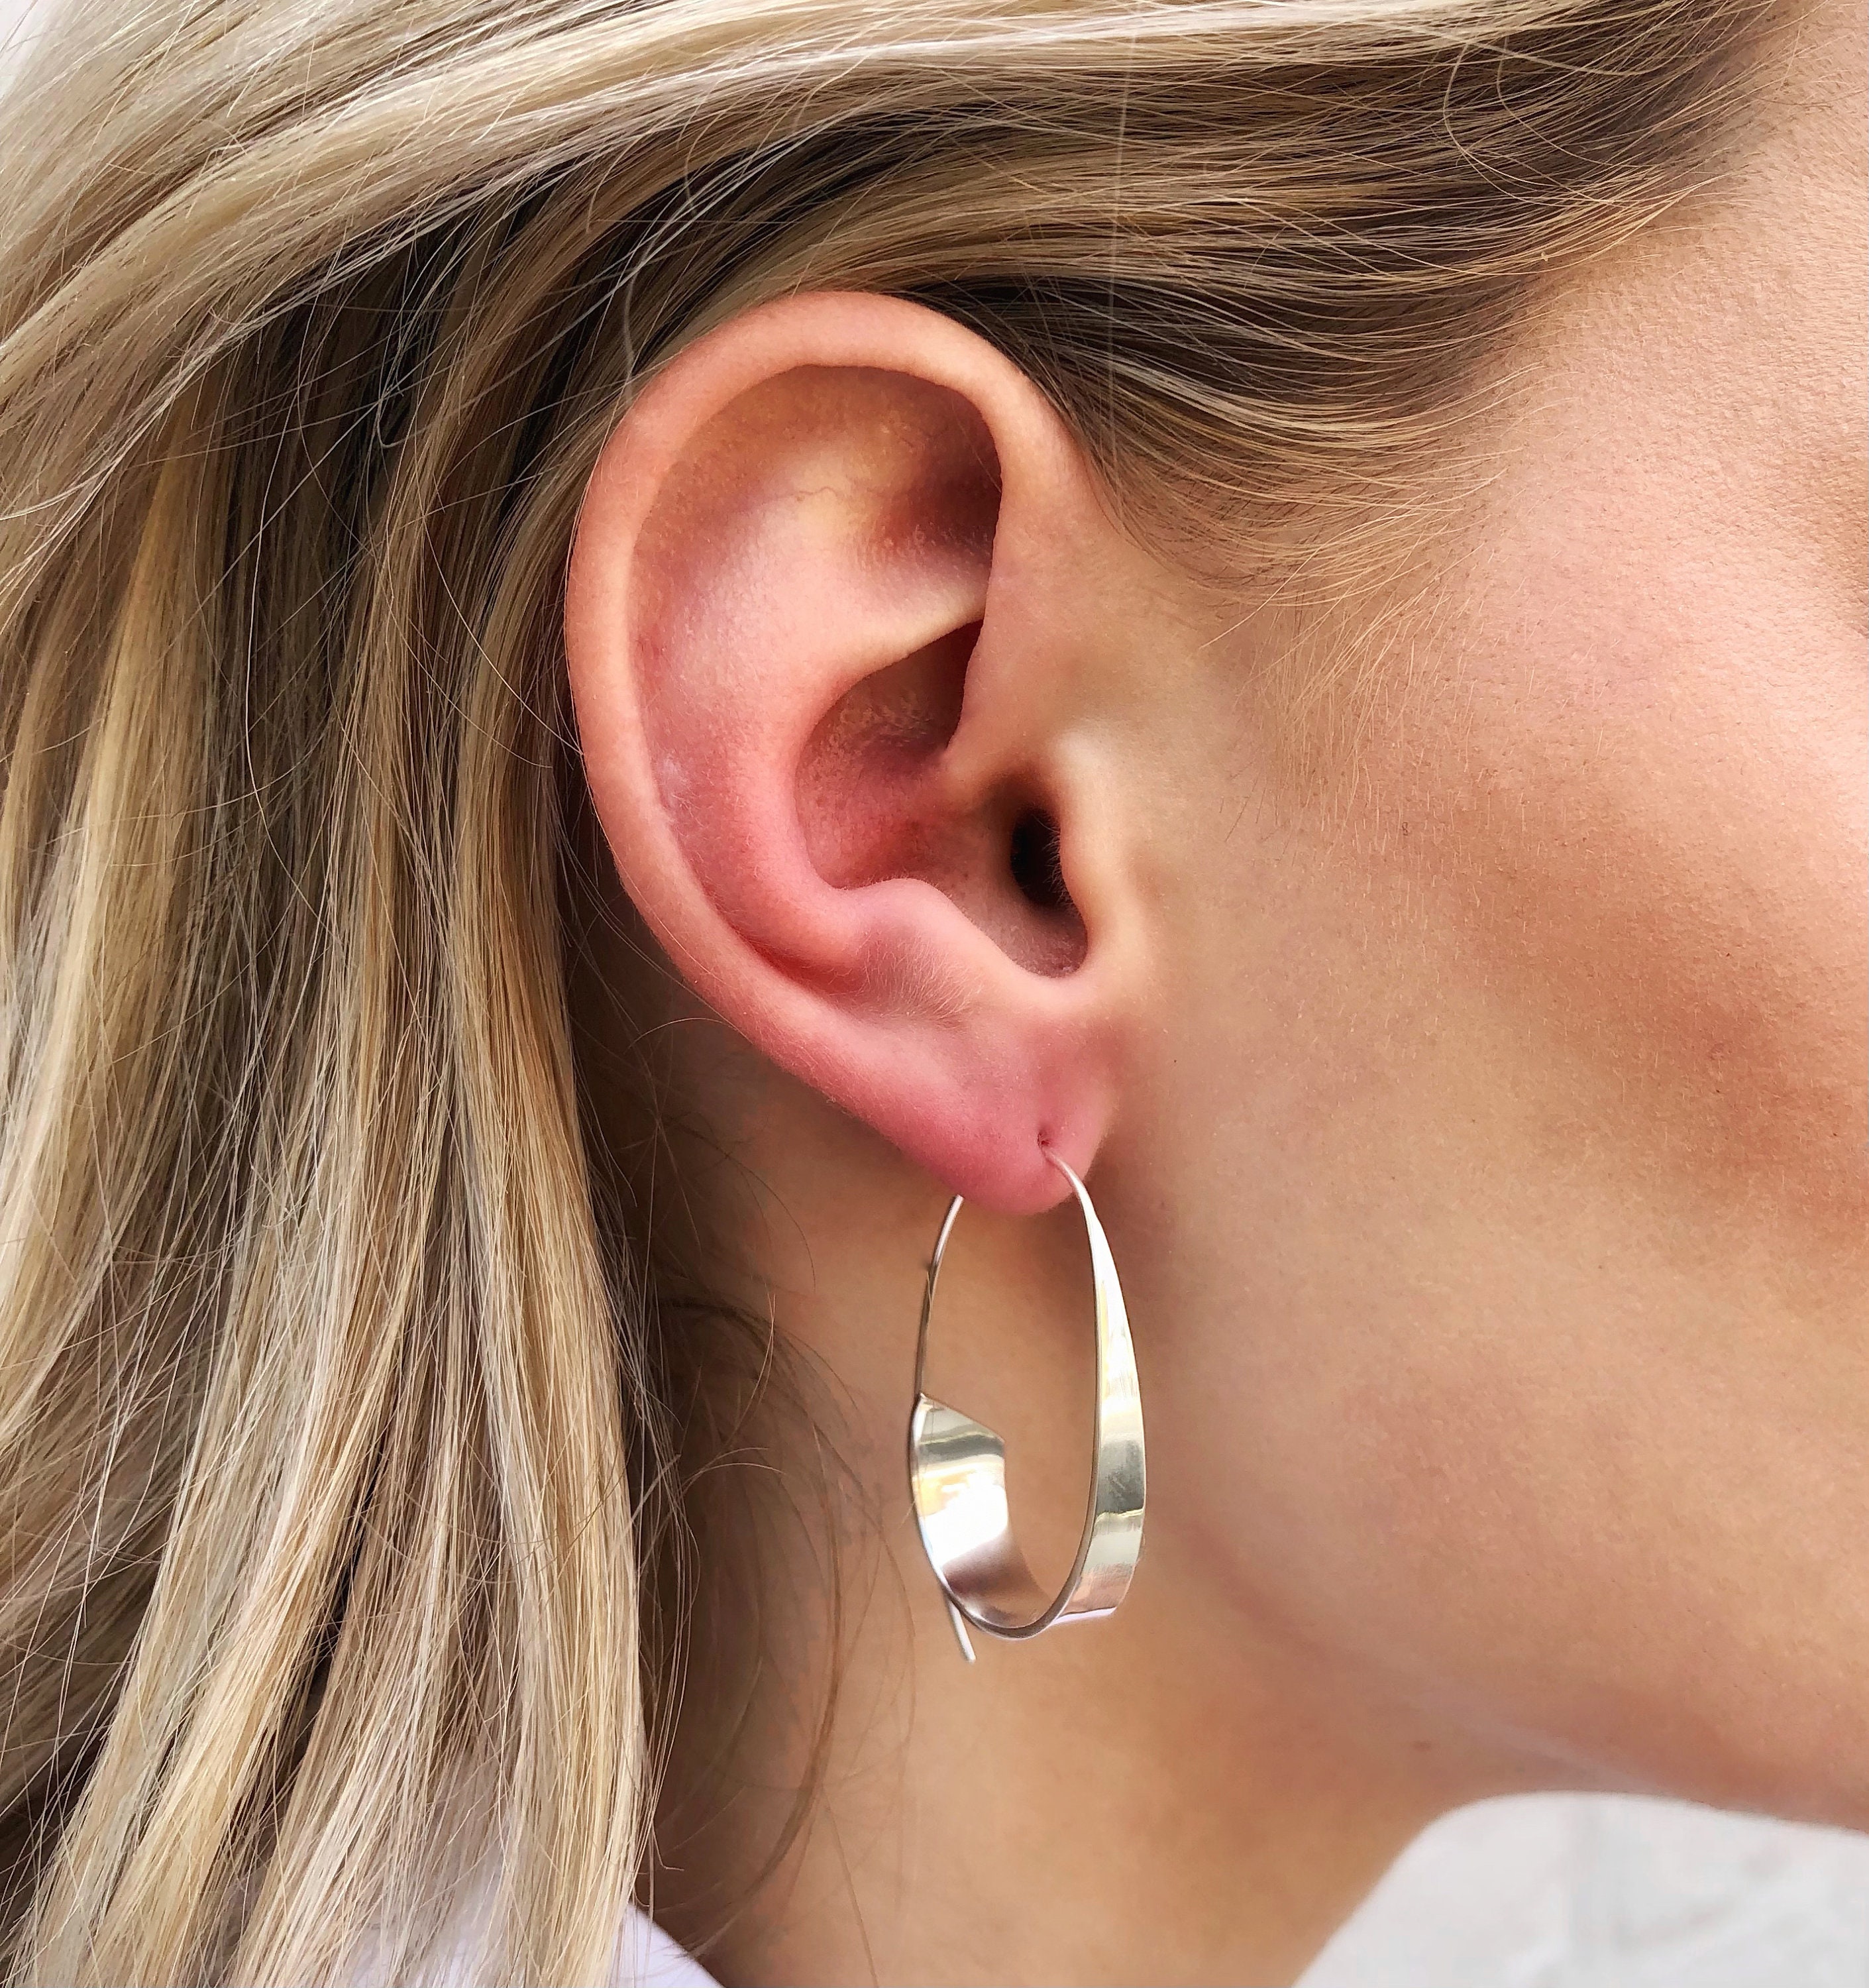 Gold-Toned Lock-Shaped Boho Hoop Earrings